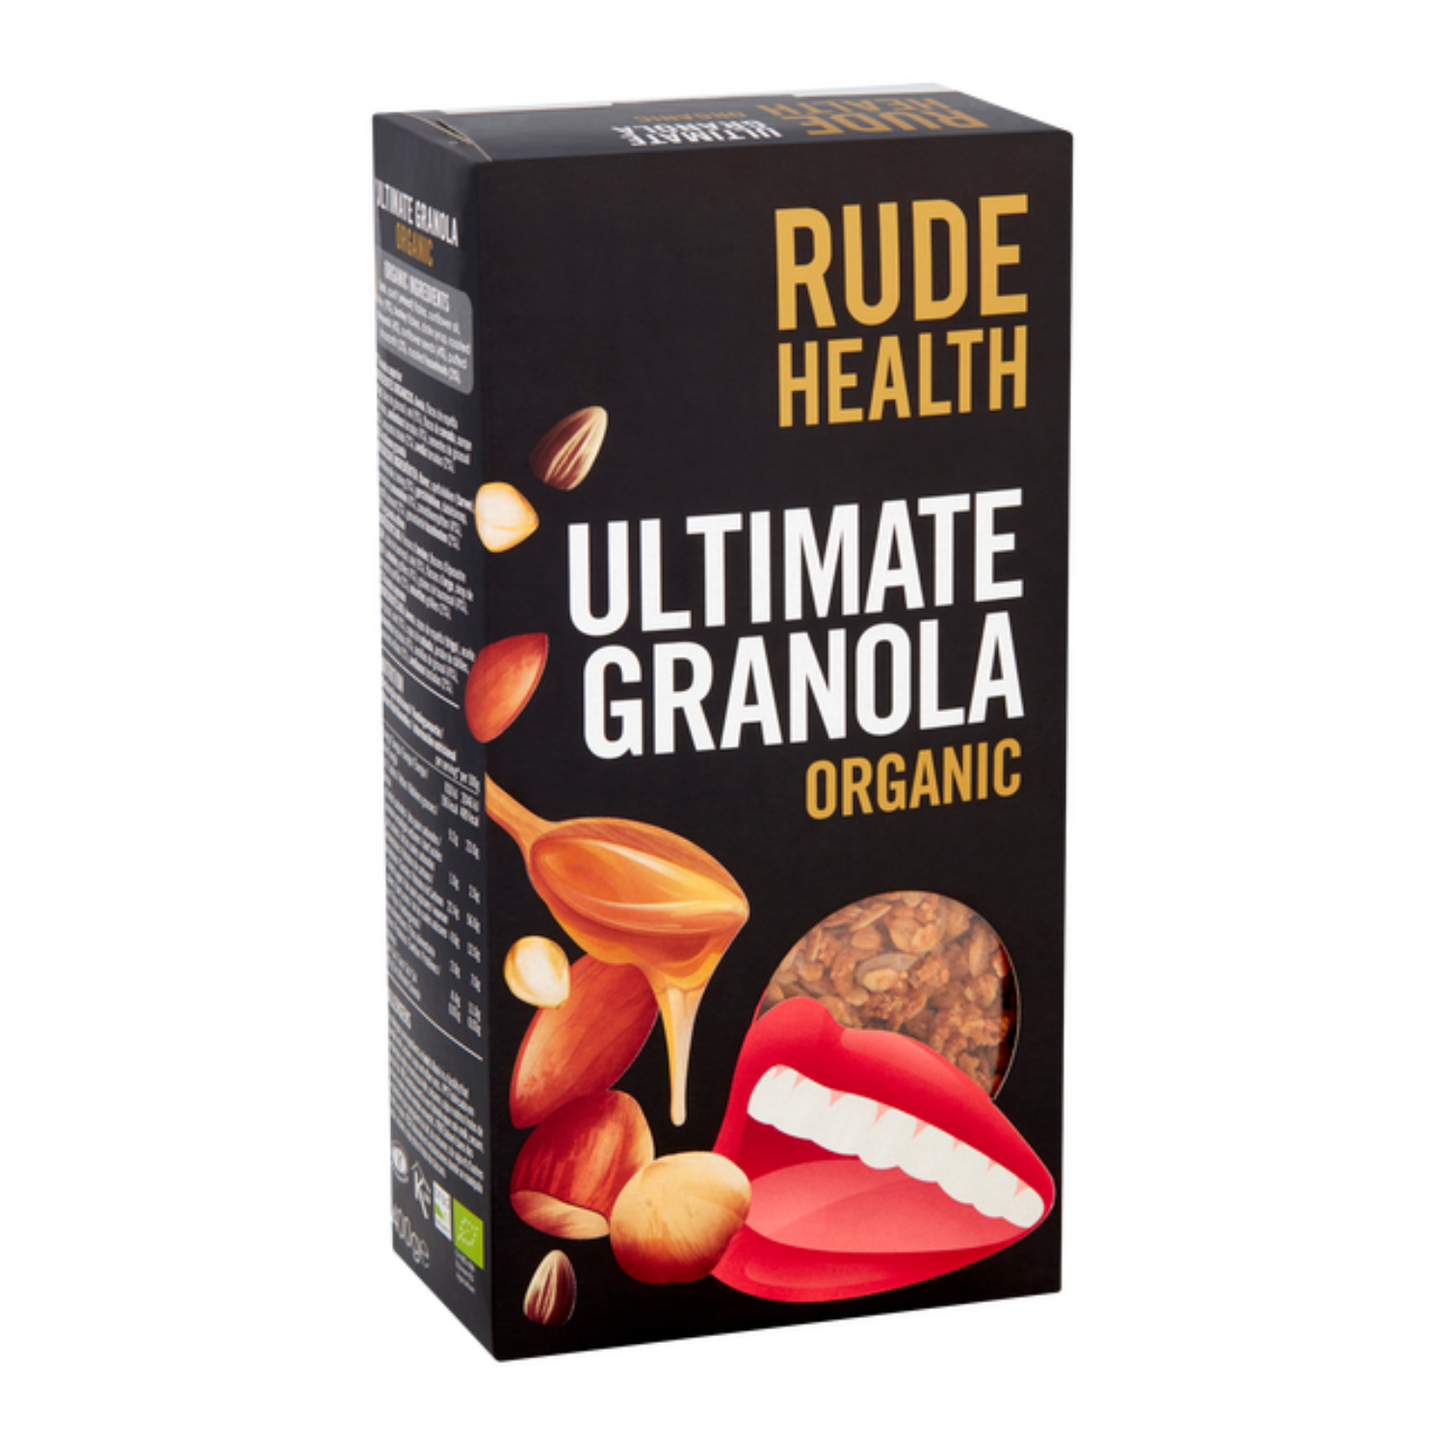 Rude Health Organic Granola - The Ultimate, 400g.